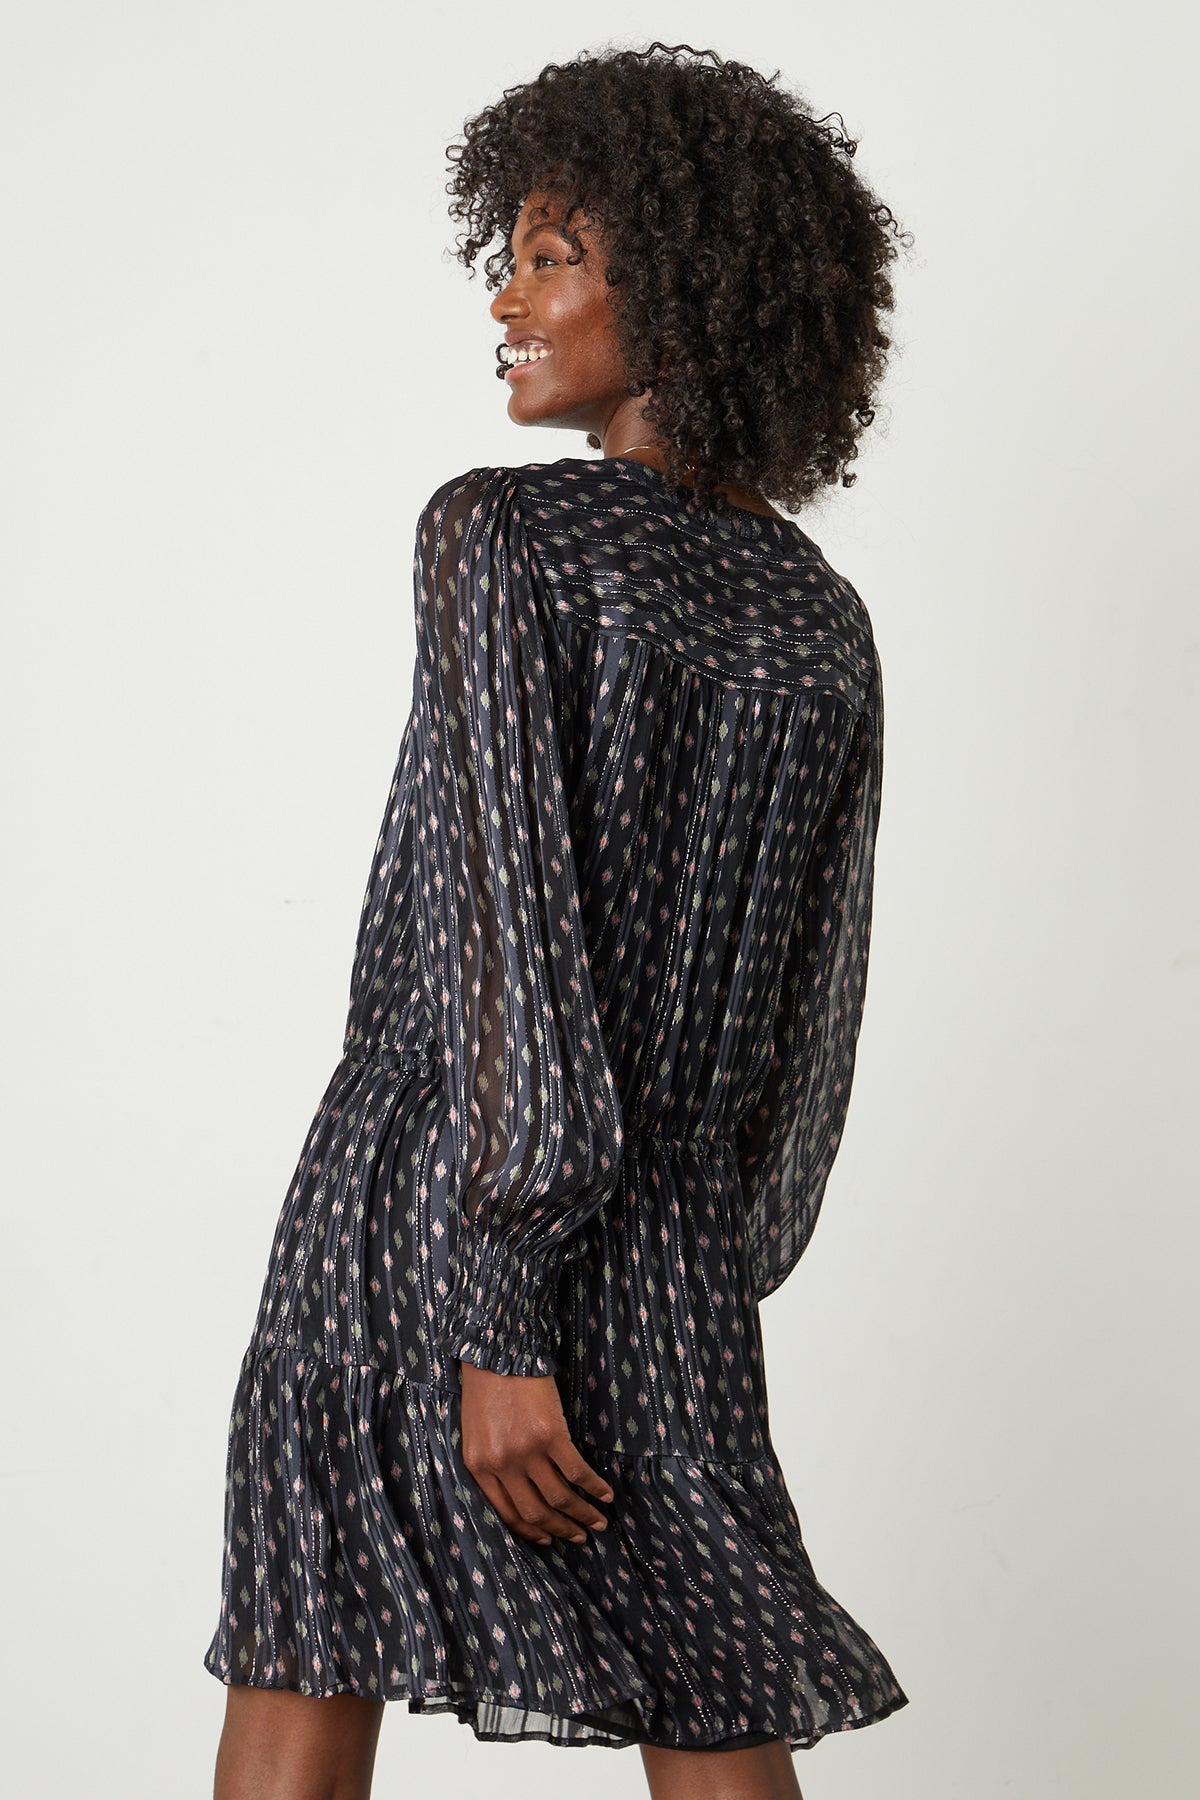 Anastasia Printed Lurex Stripe Dress in black starlit pattern back-26011277263041